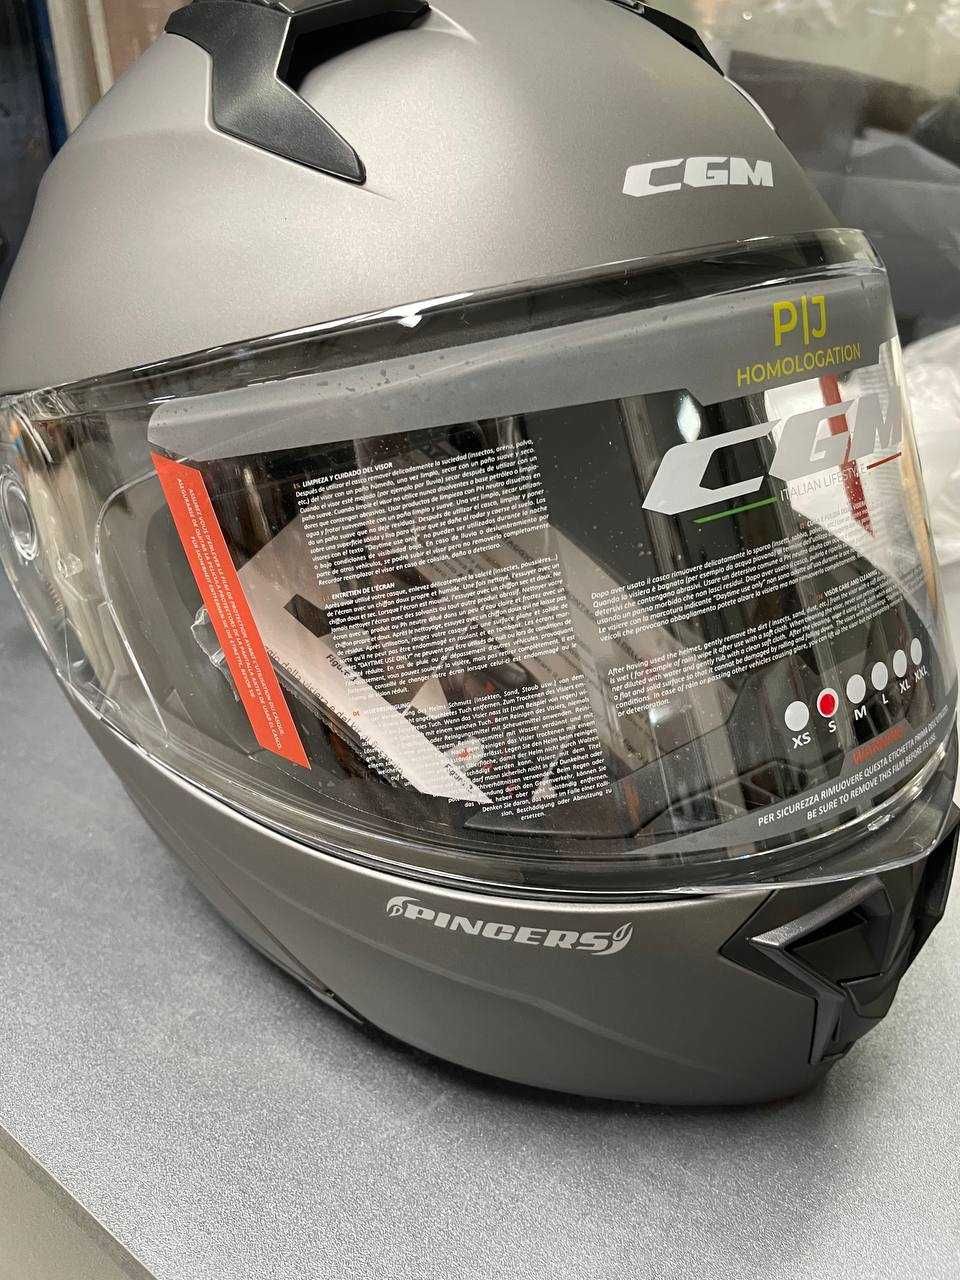 Шлем для мото momentum evo smart | origine | cgm motorcycle helmet